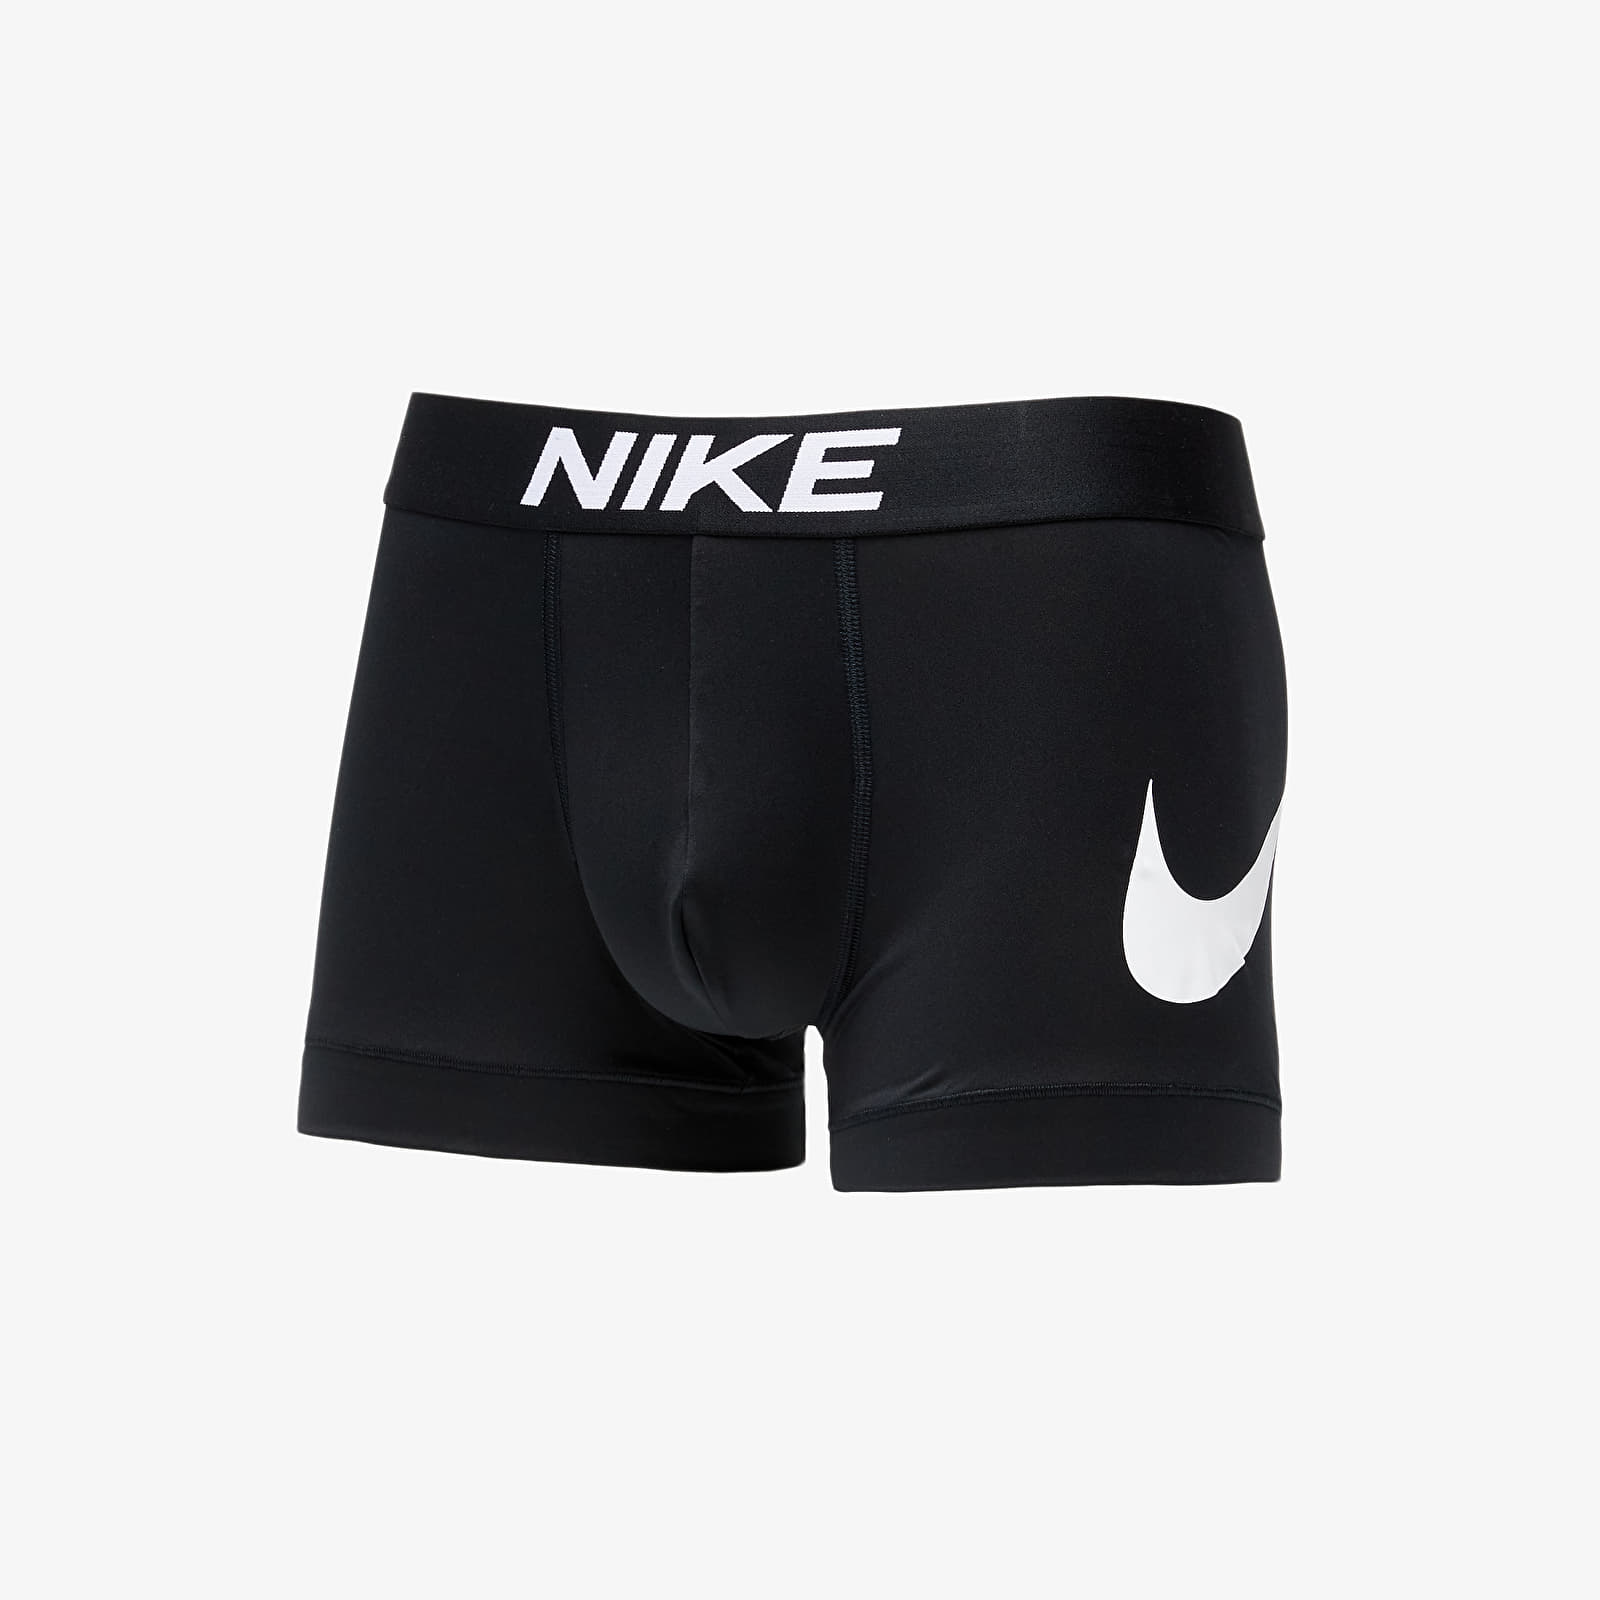 Boxer shorts Nike Essential Micro Trunk Shorty Black